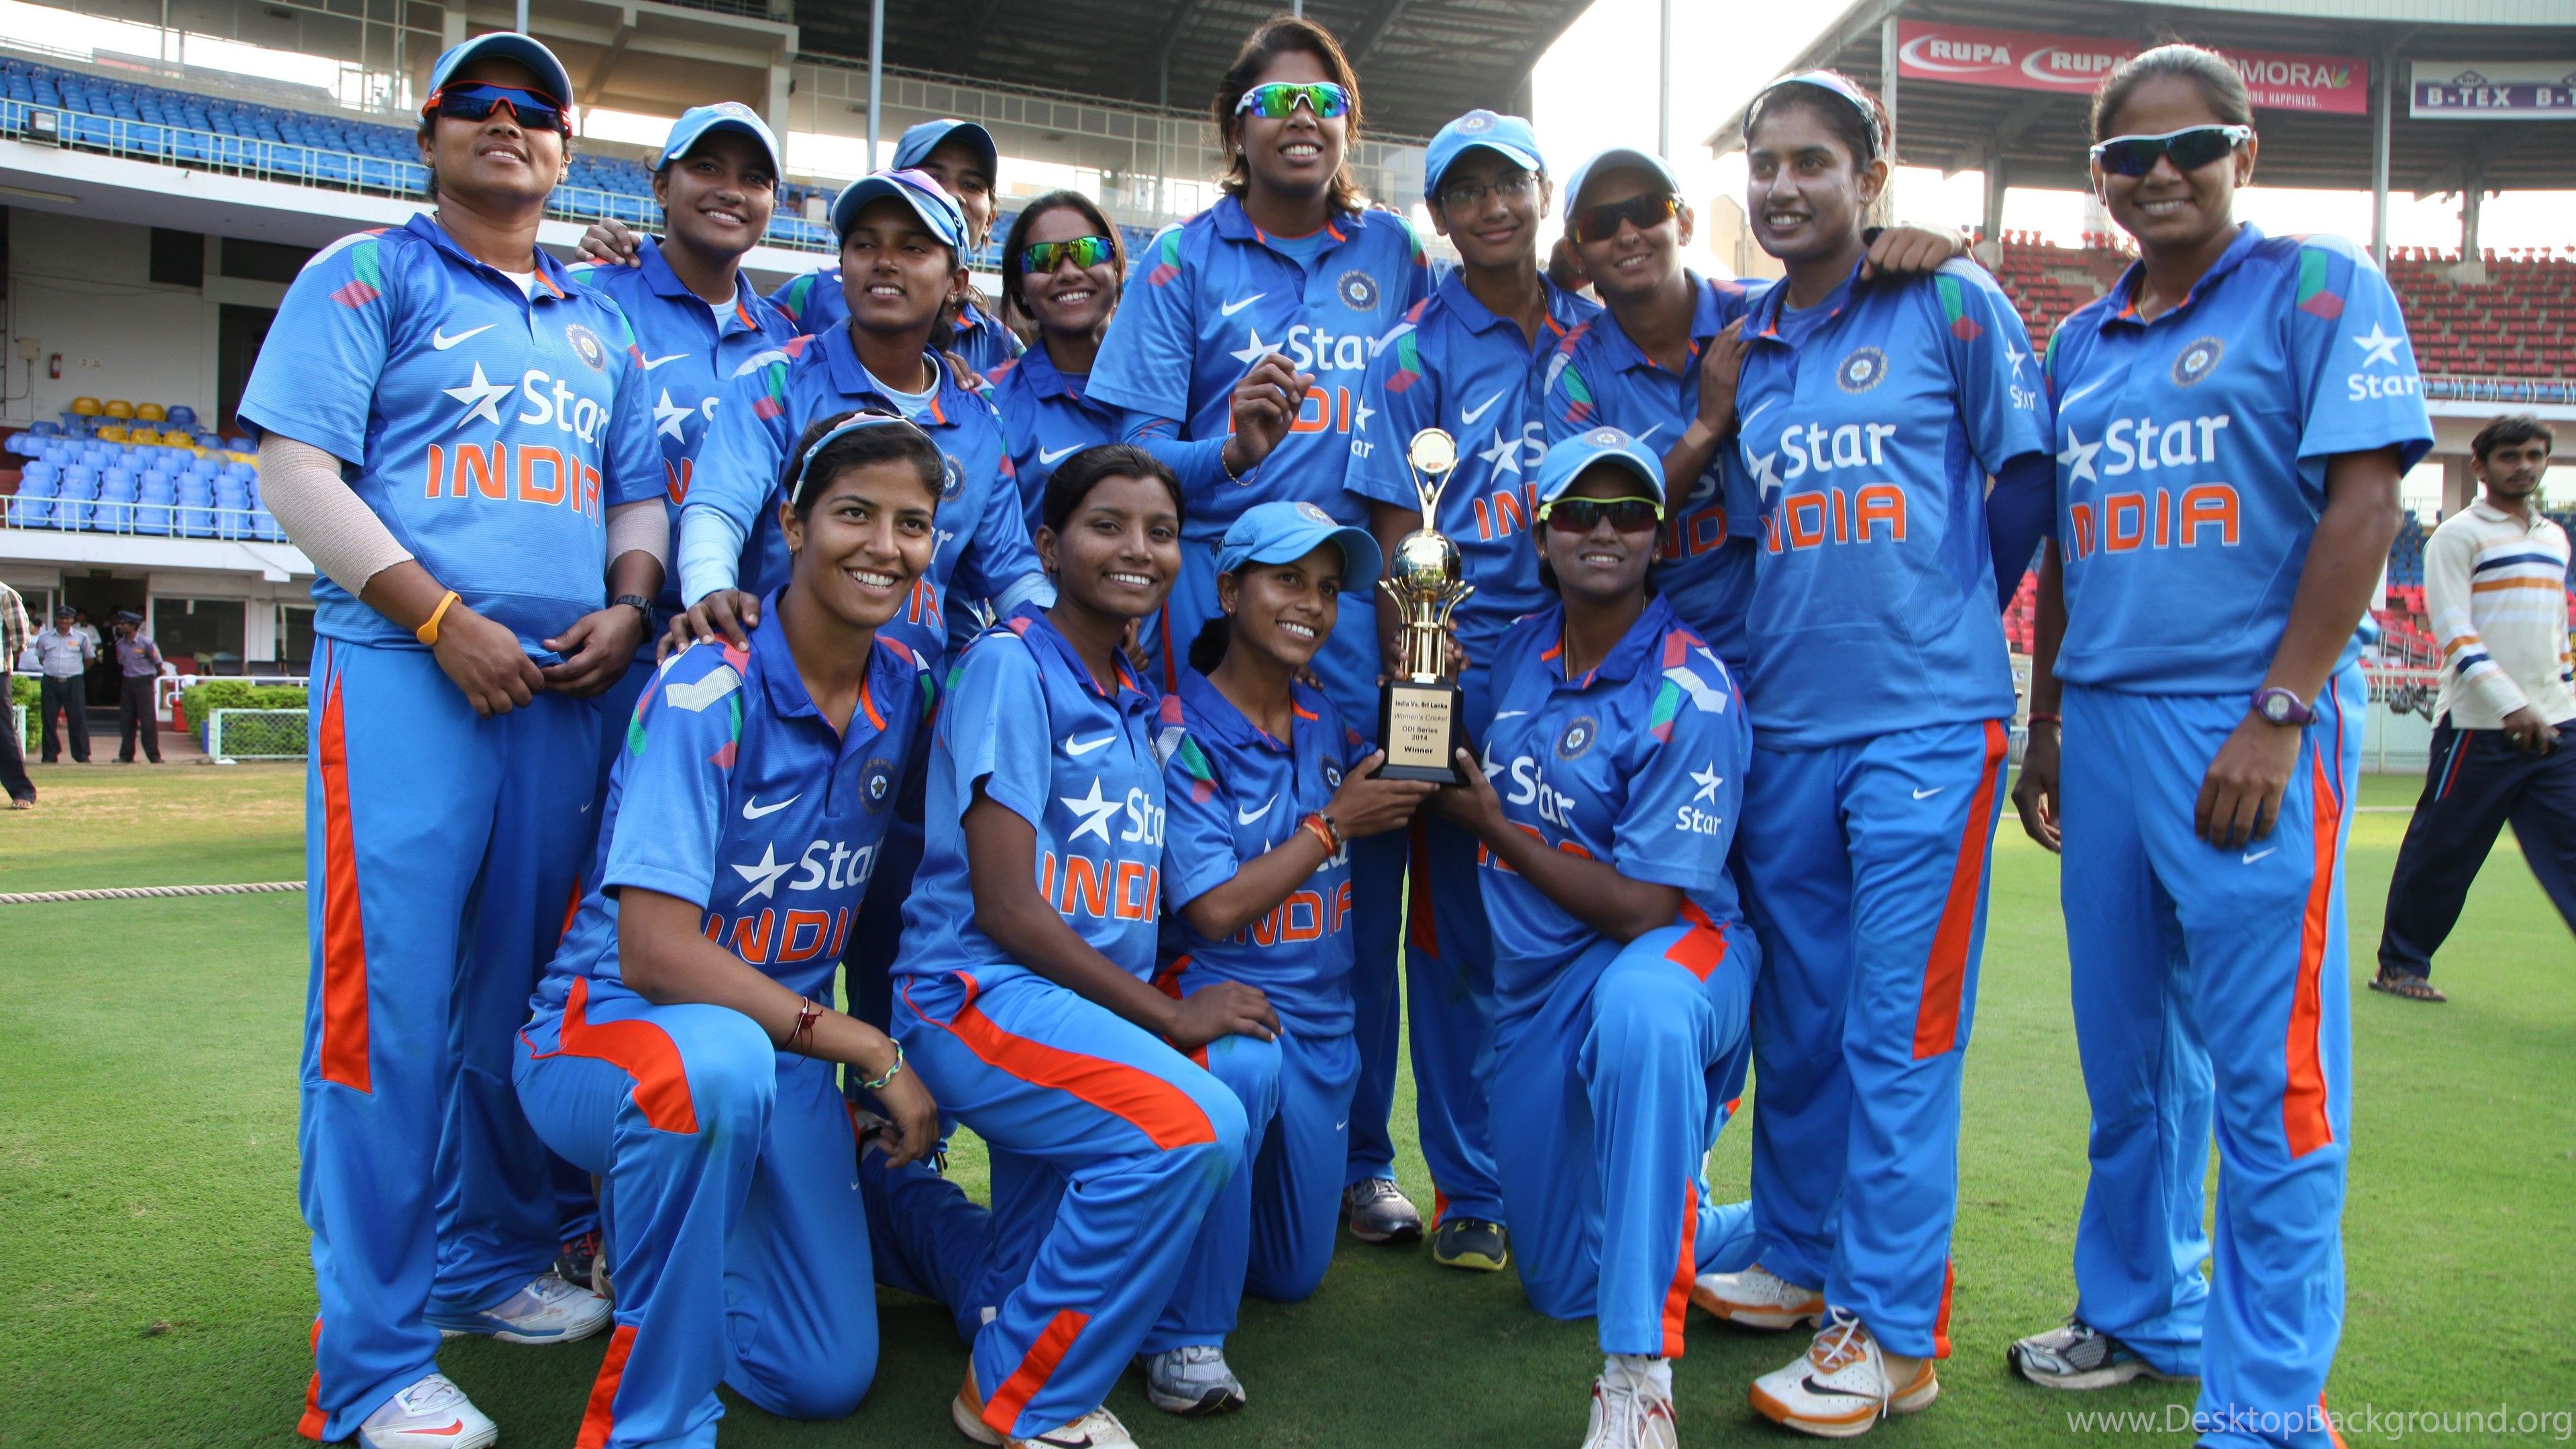 India Women's National Cricket Team Wallpapers - Wallpaper ...